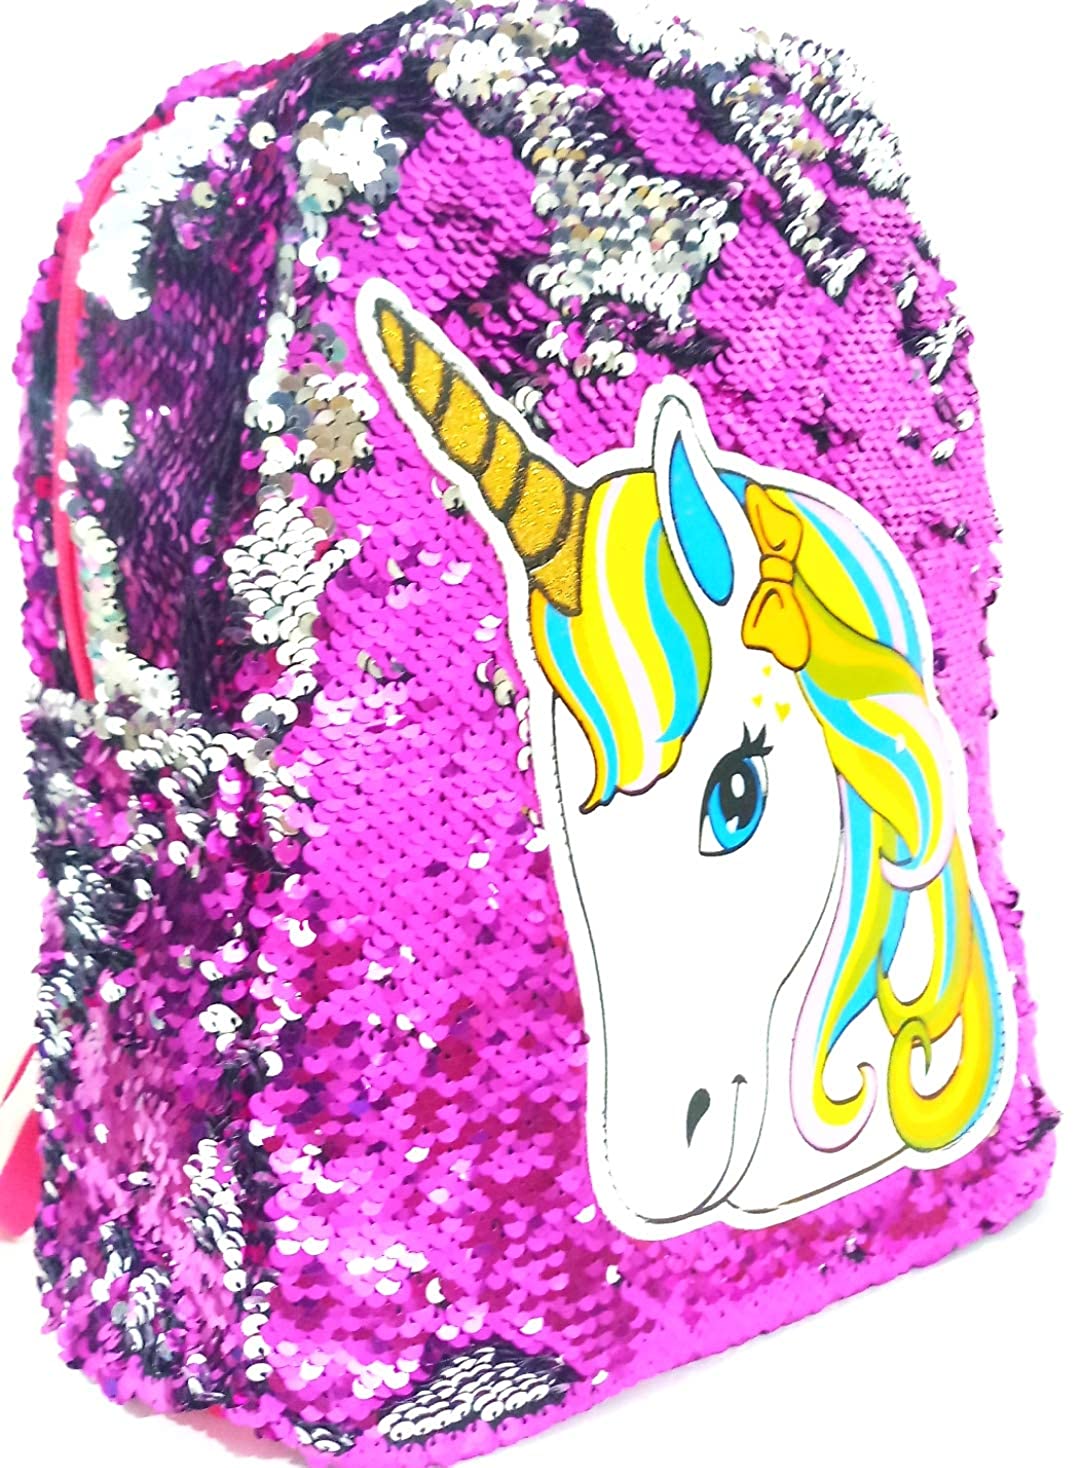 Glittery Unicorn Crossbody Bag For Girls Options, Cute Cartoon Mini Handbags  Design, Changeable Shoulder Strap BY1574 From Wuchaoqun, $3.5 | DHgate.Com